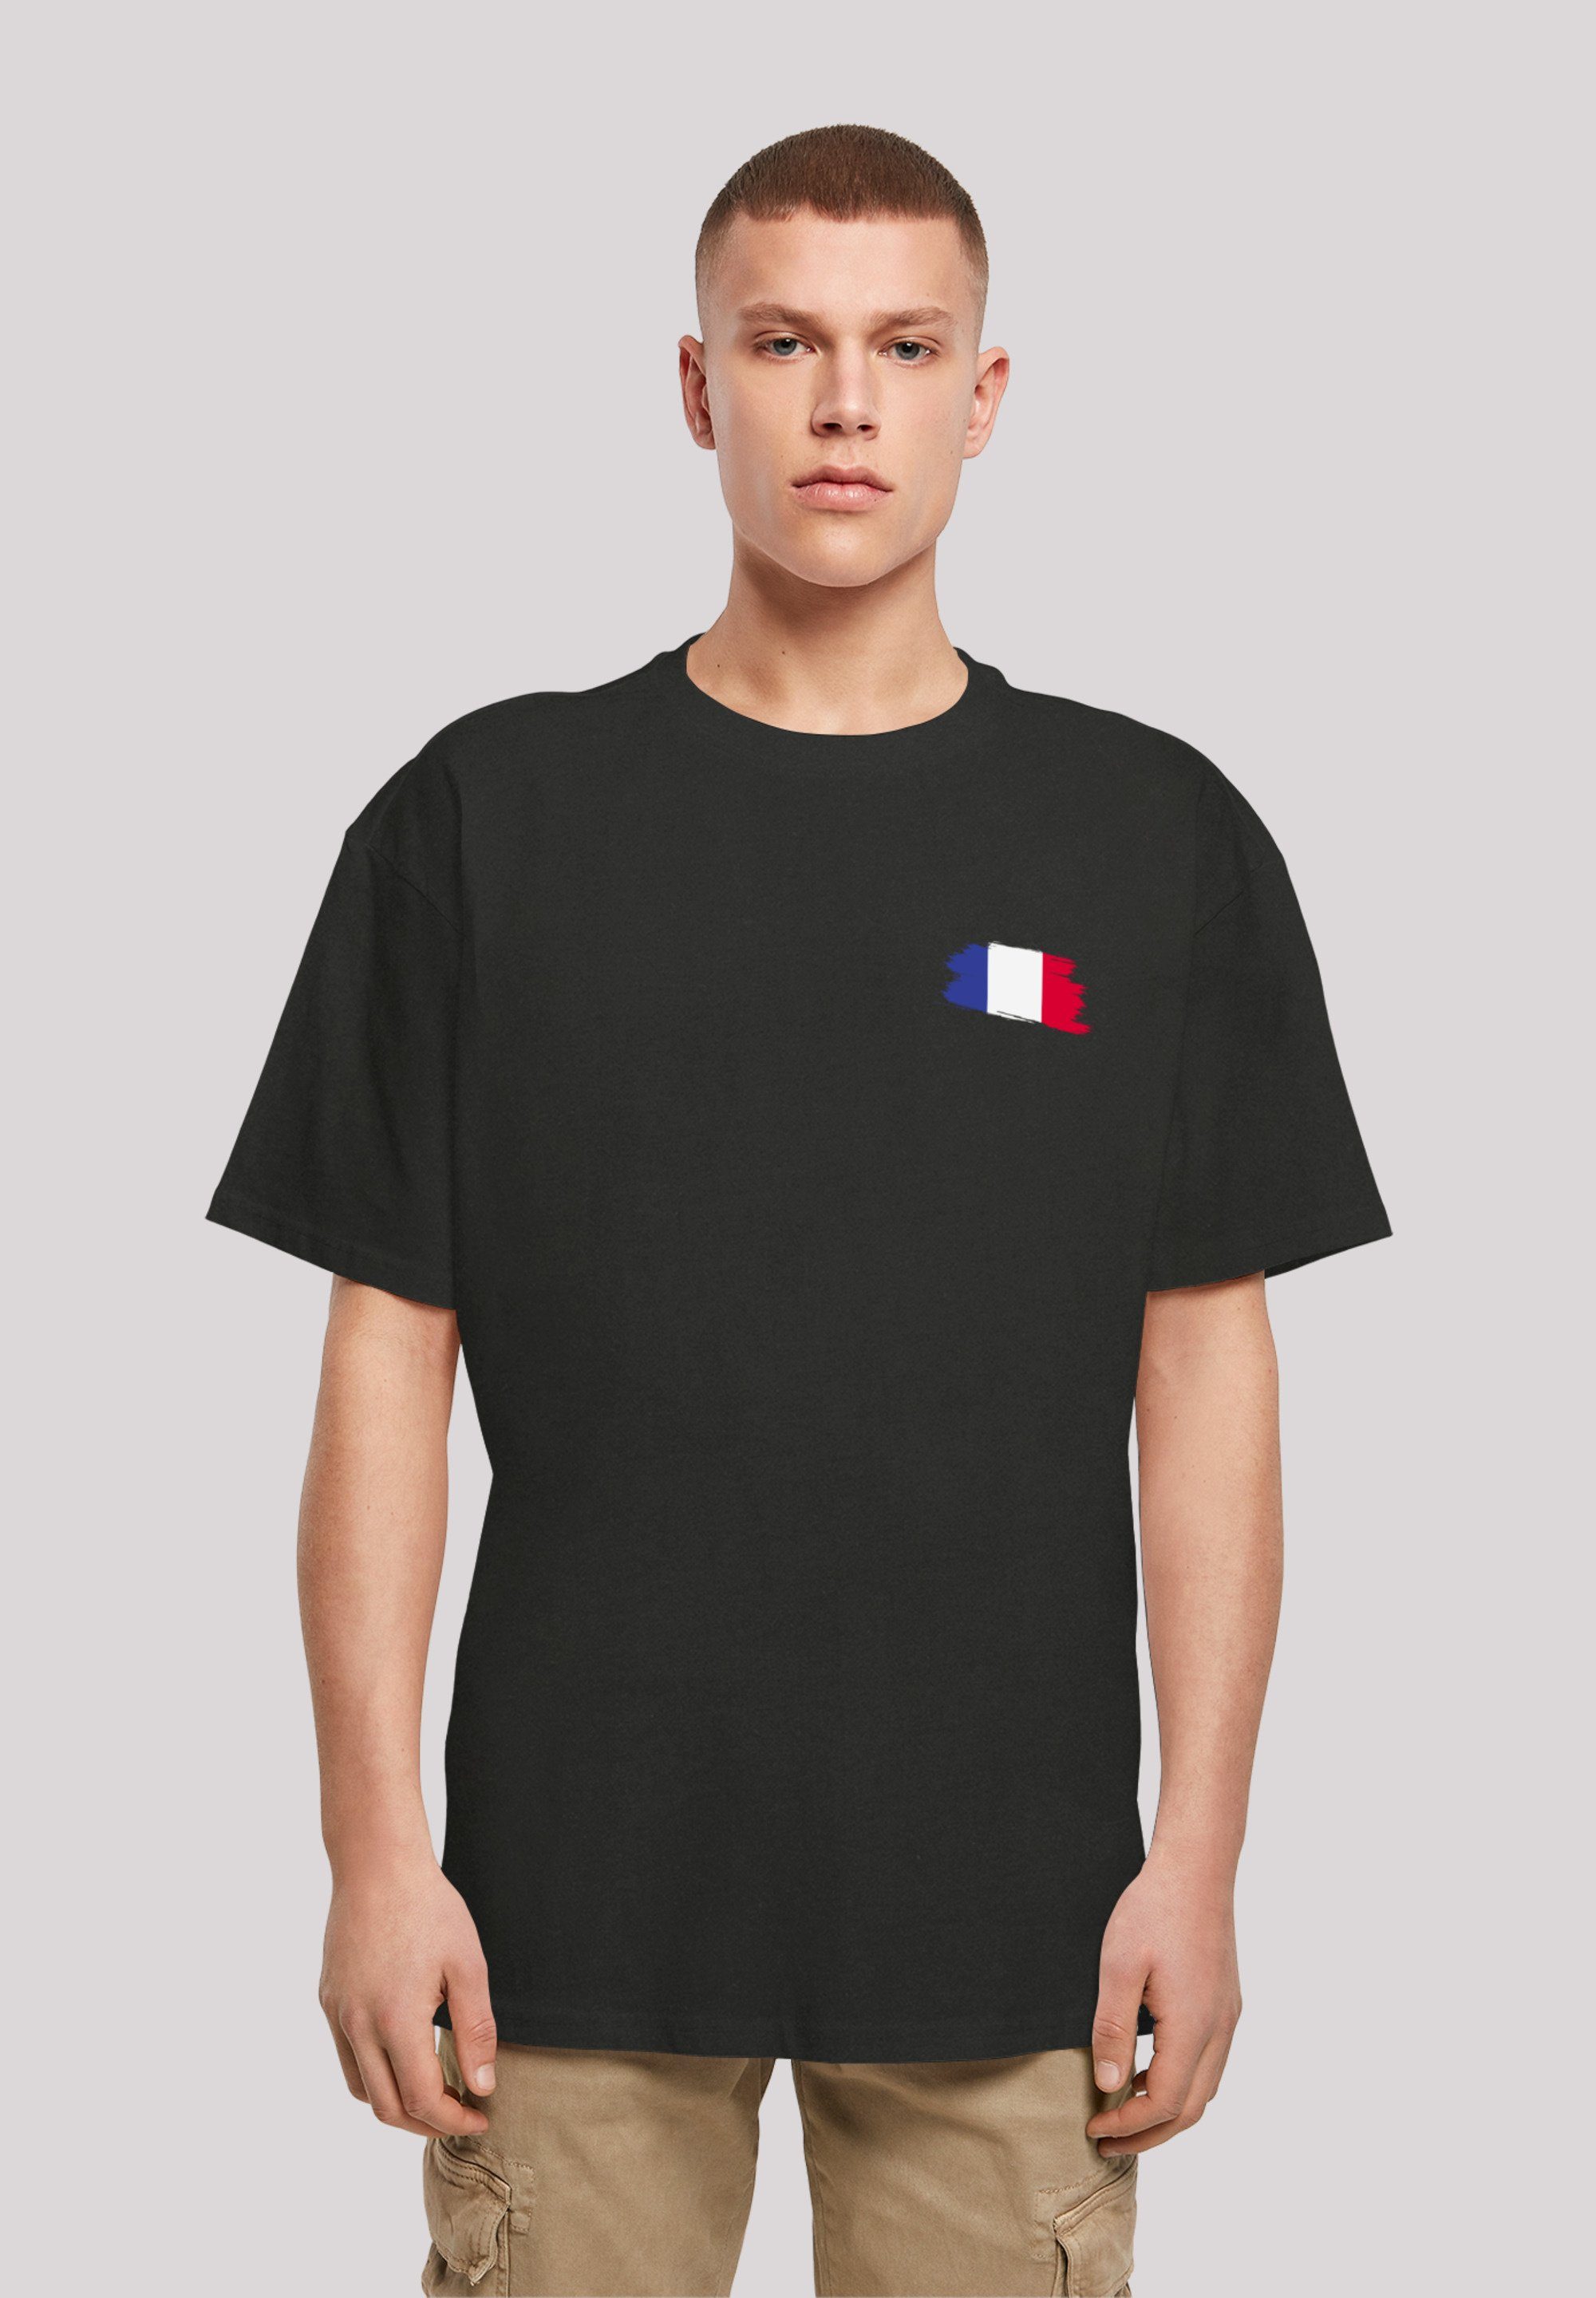 F4NT4STIC T-Shirt France Frankreich Flagge Fahne Print schwarz